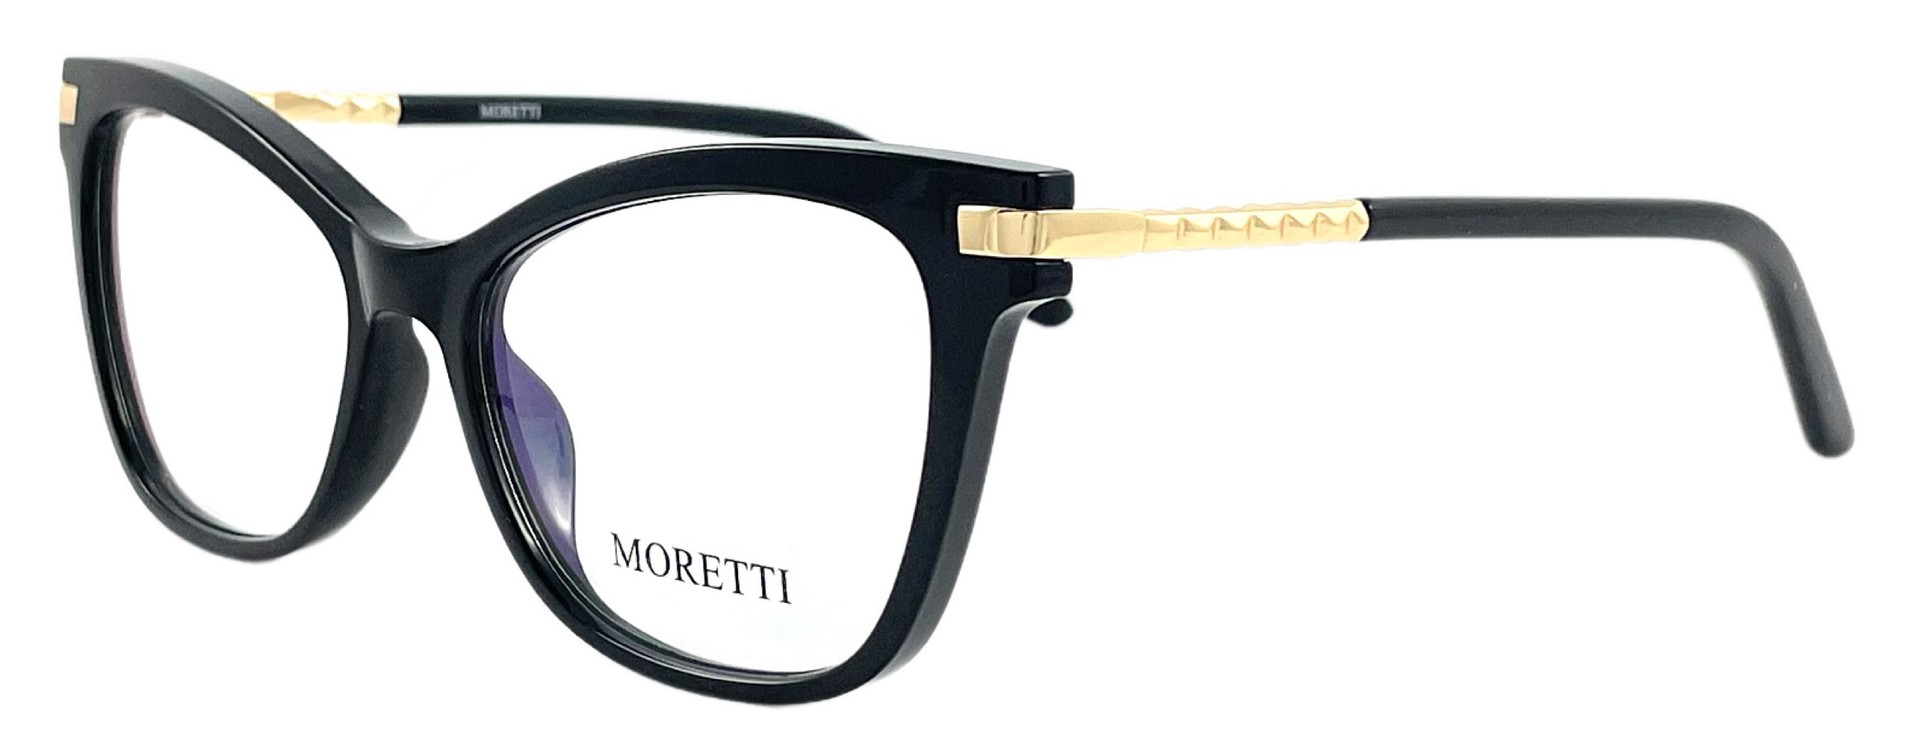 Moretti 2108 C1 2